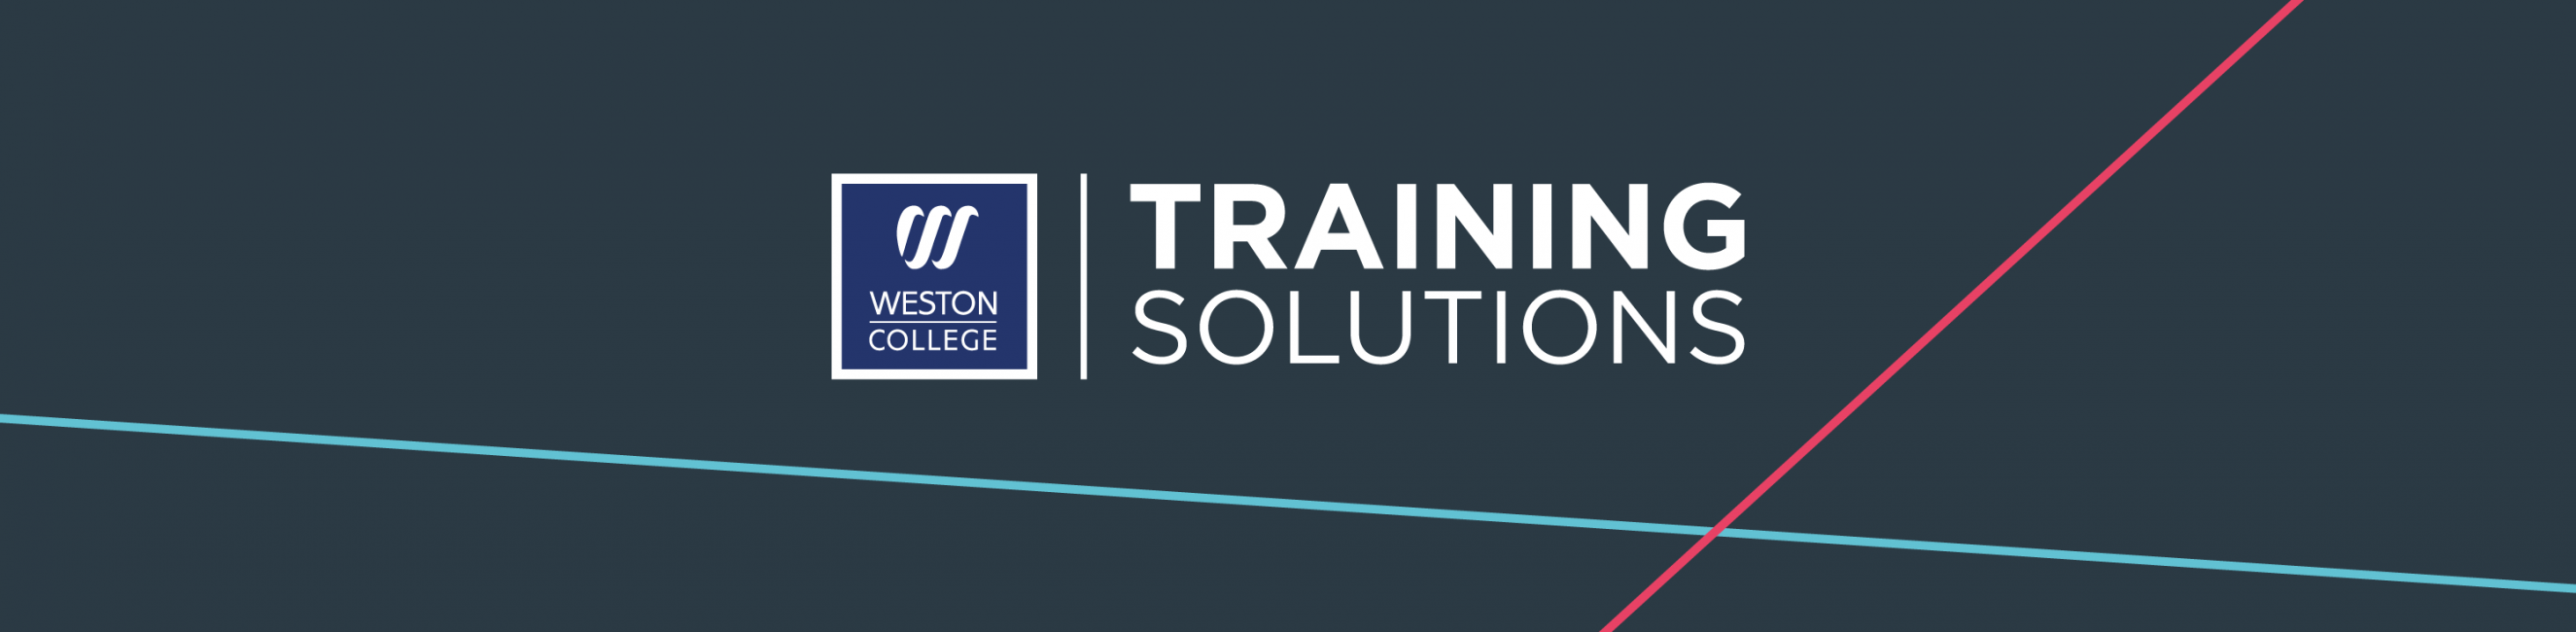 training solutions